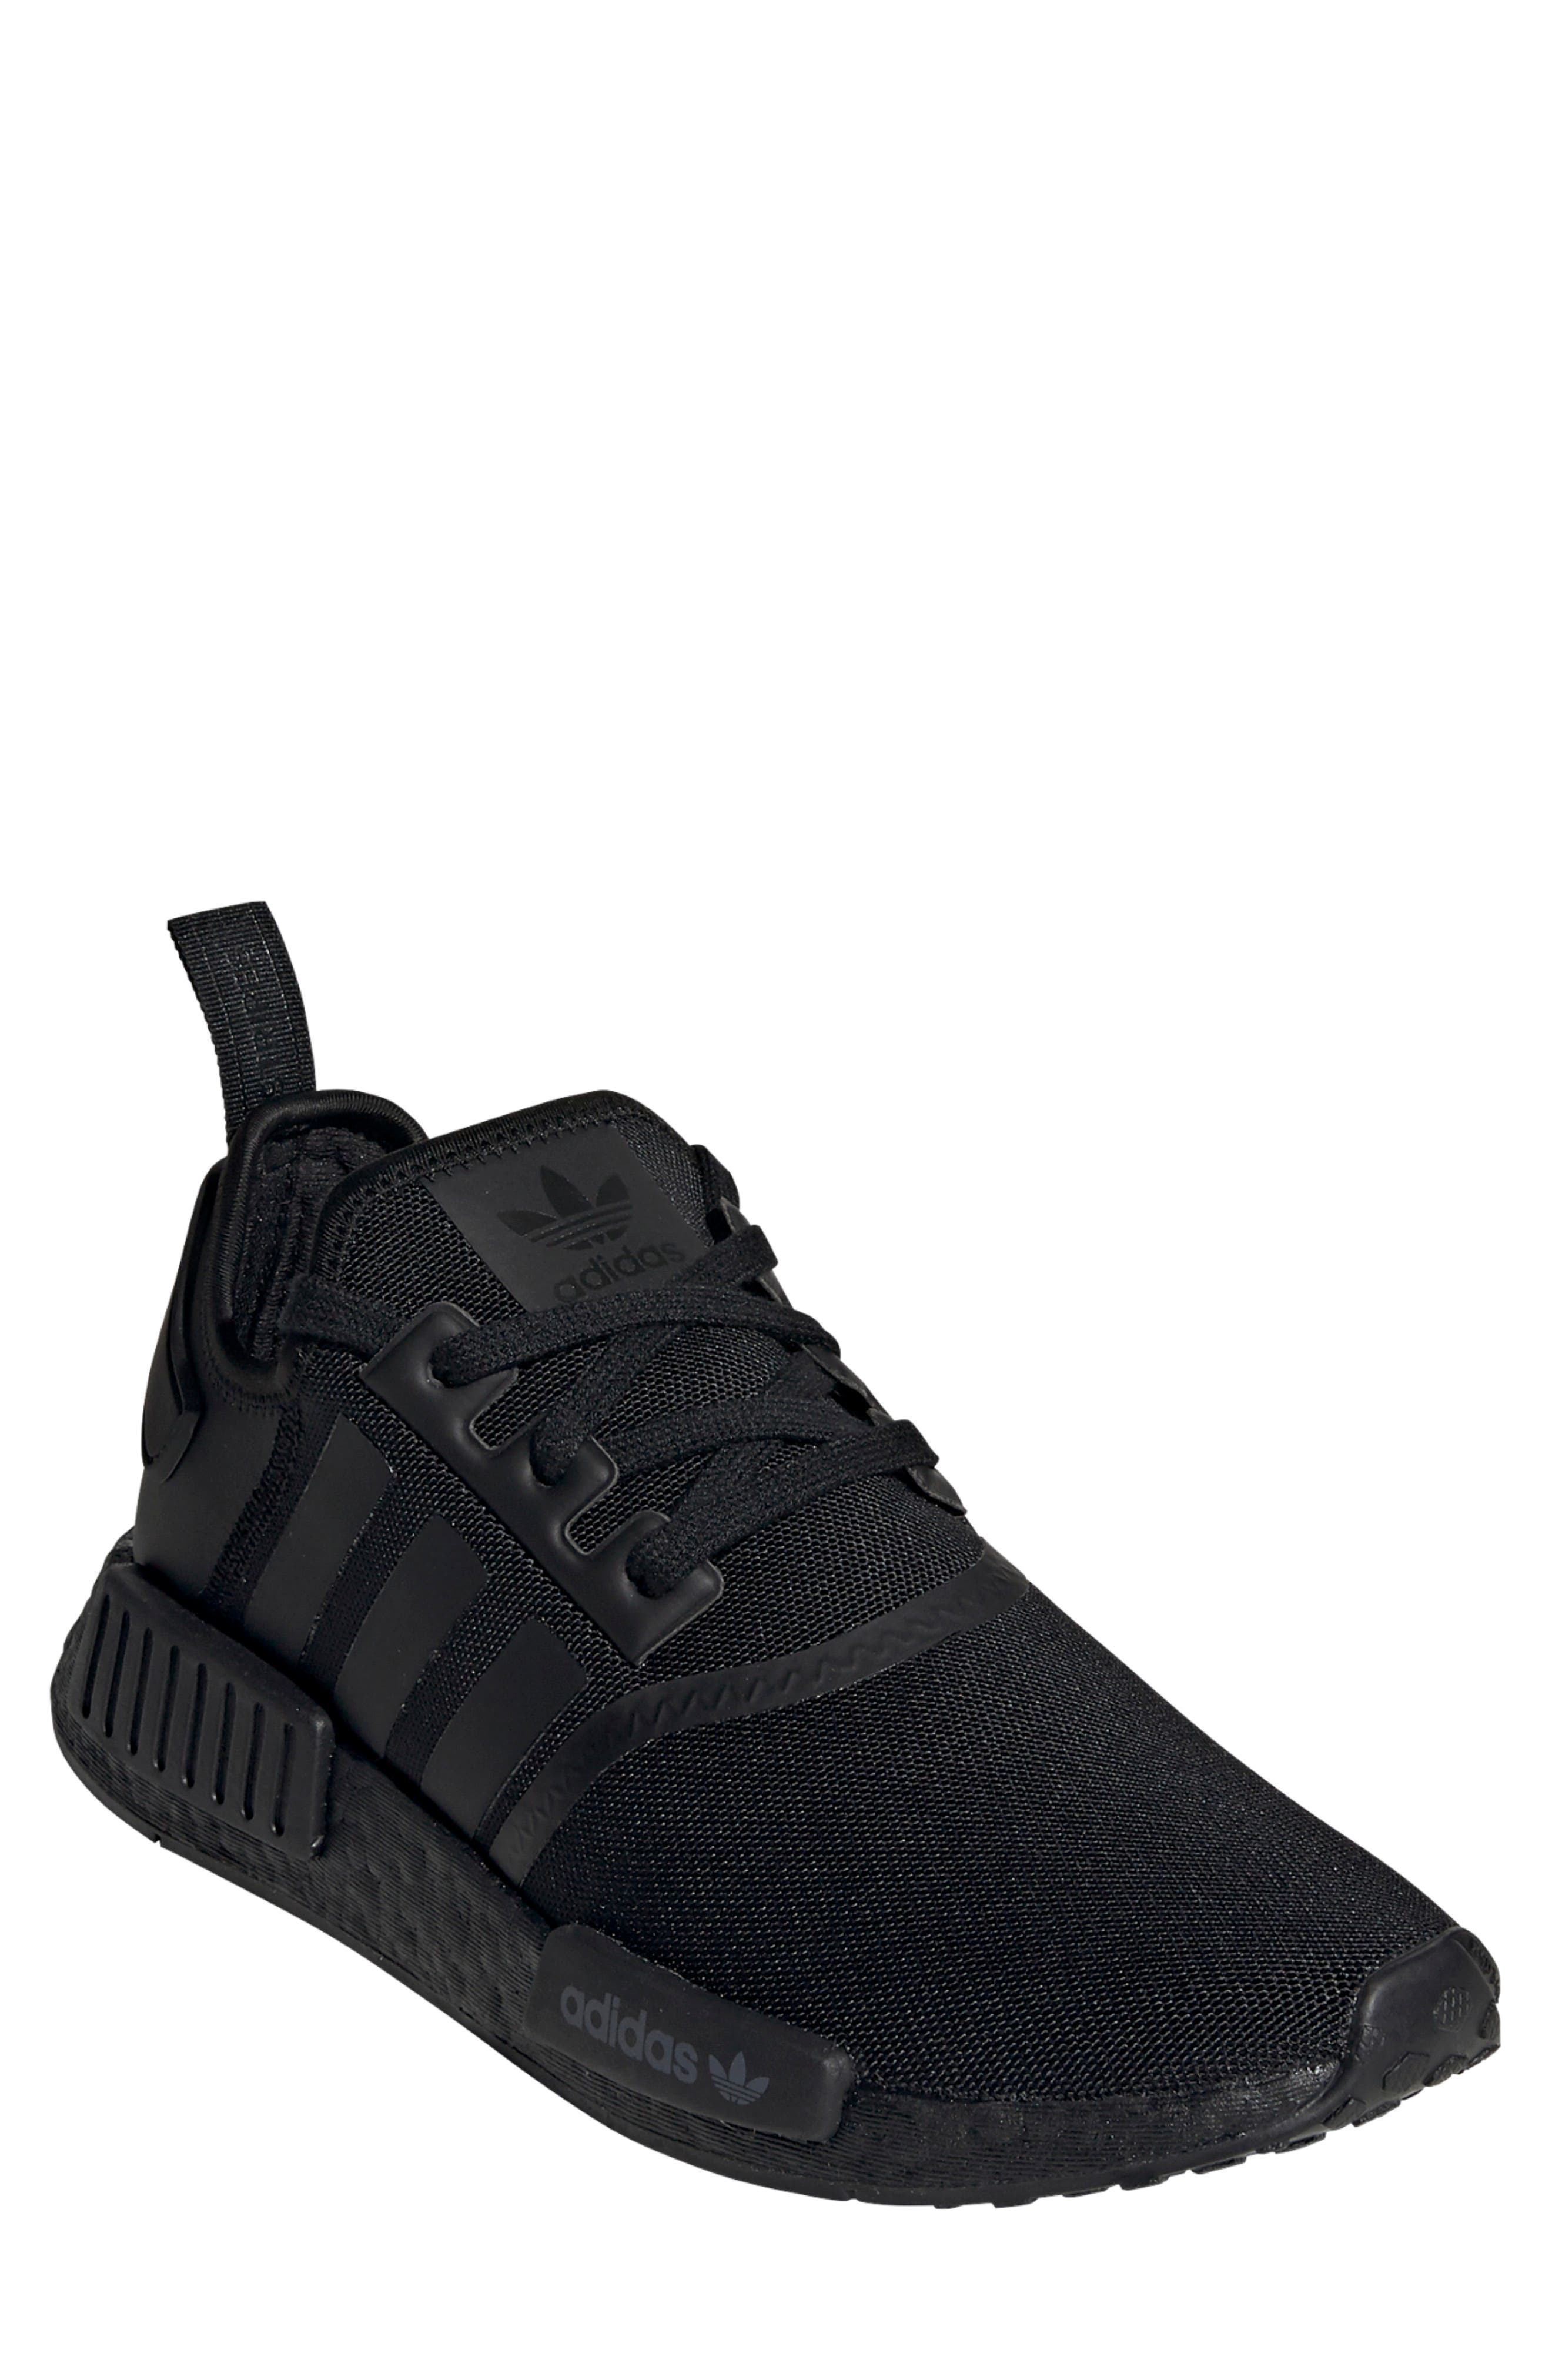 black on black adidas shoes